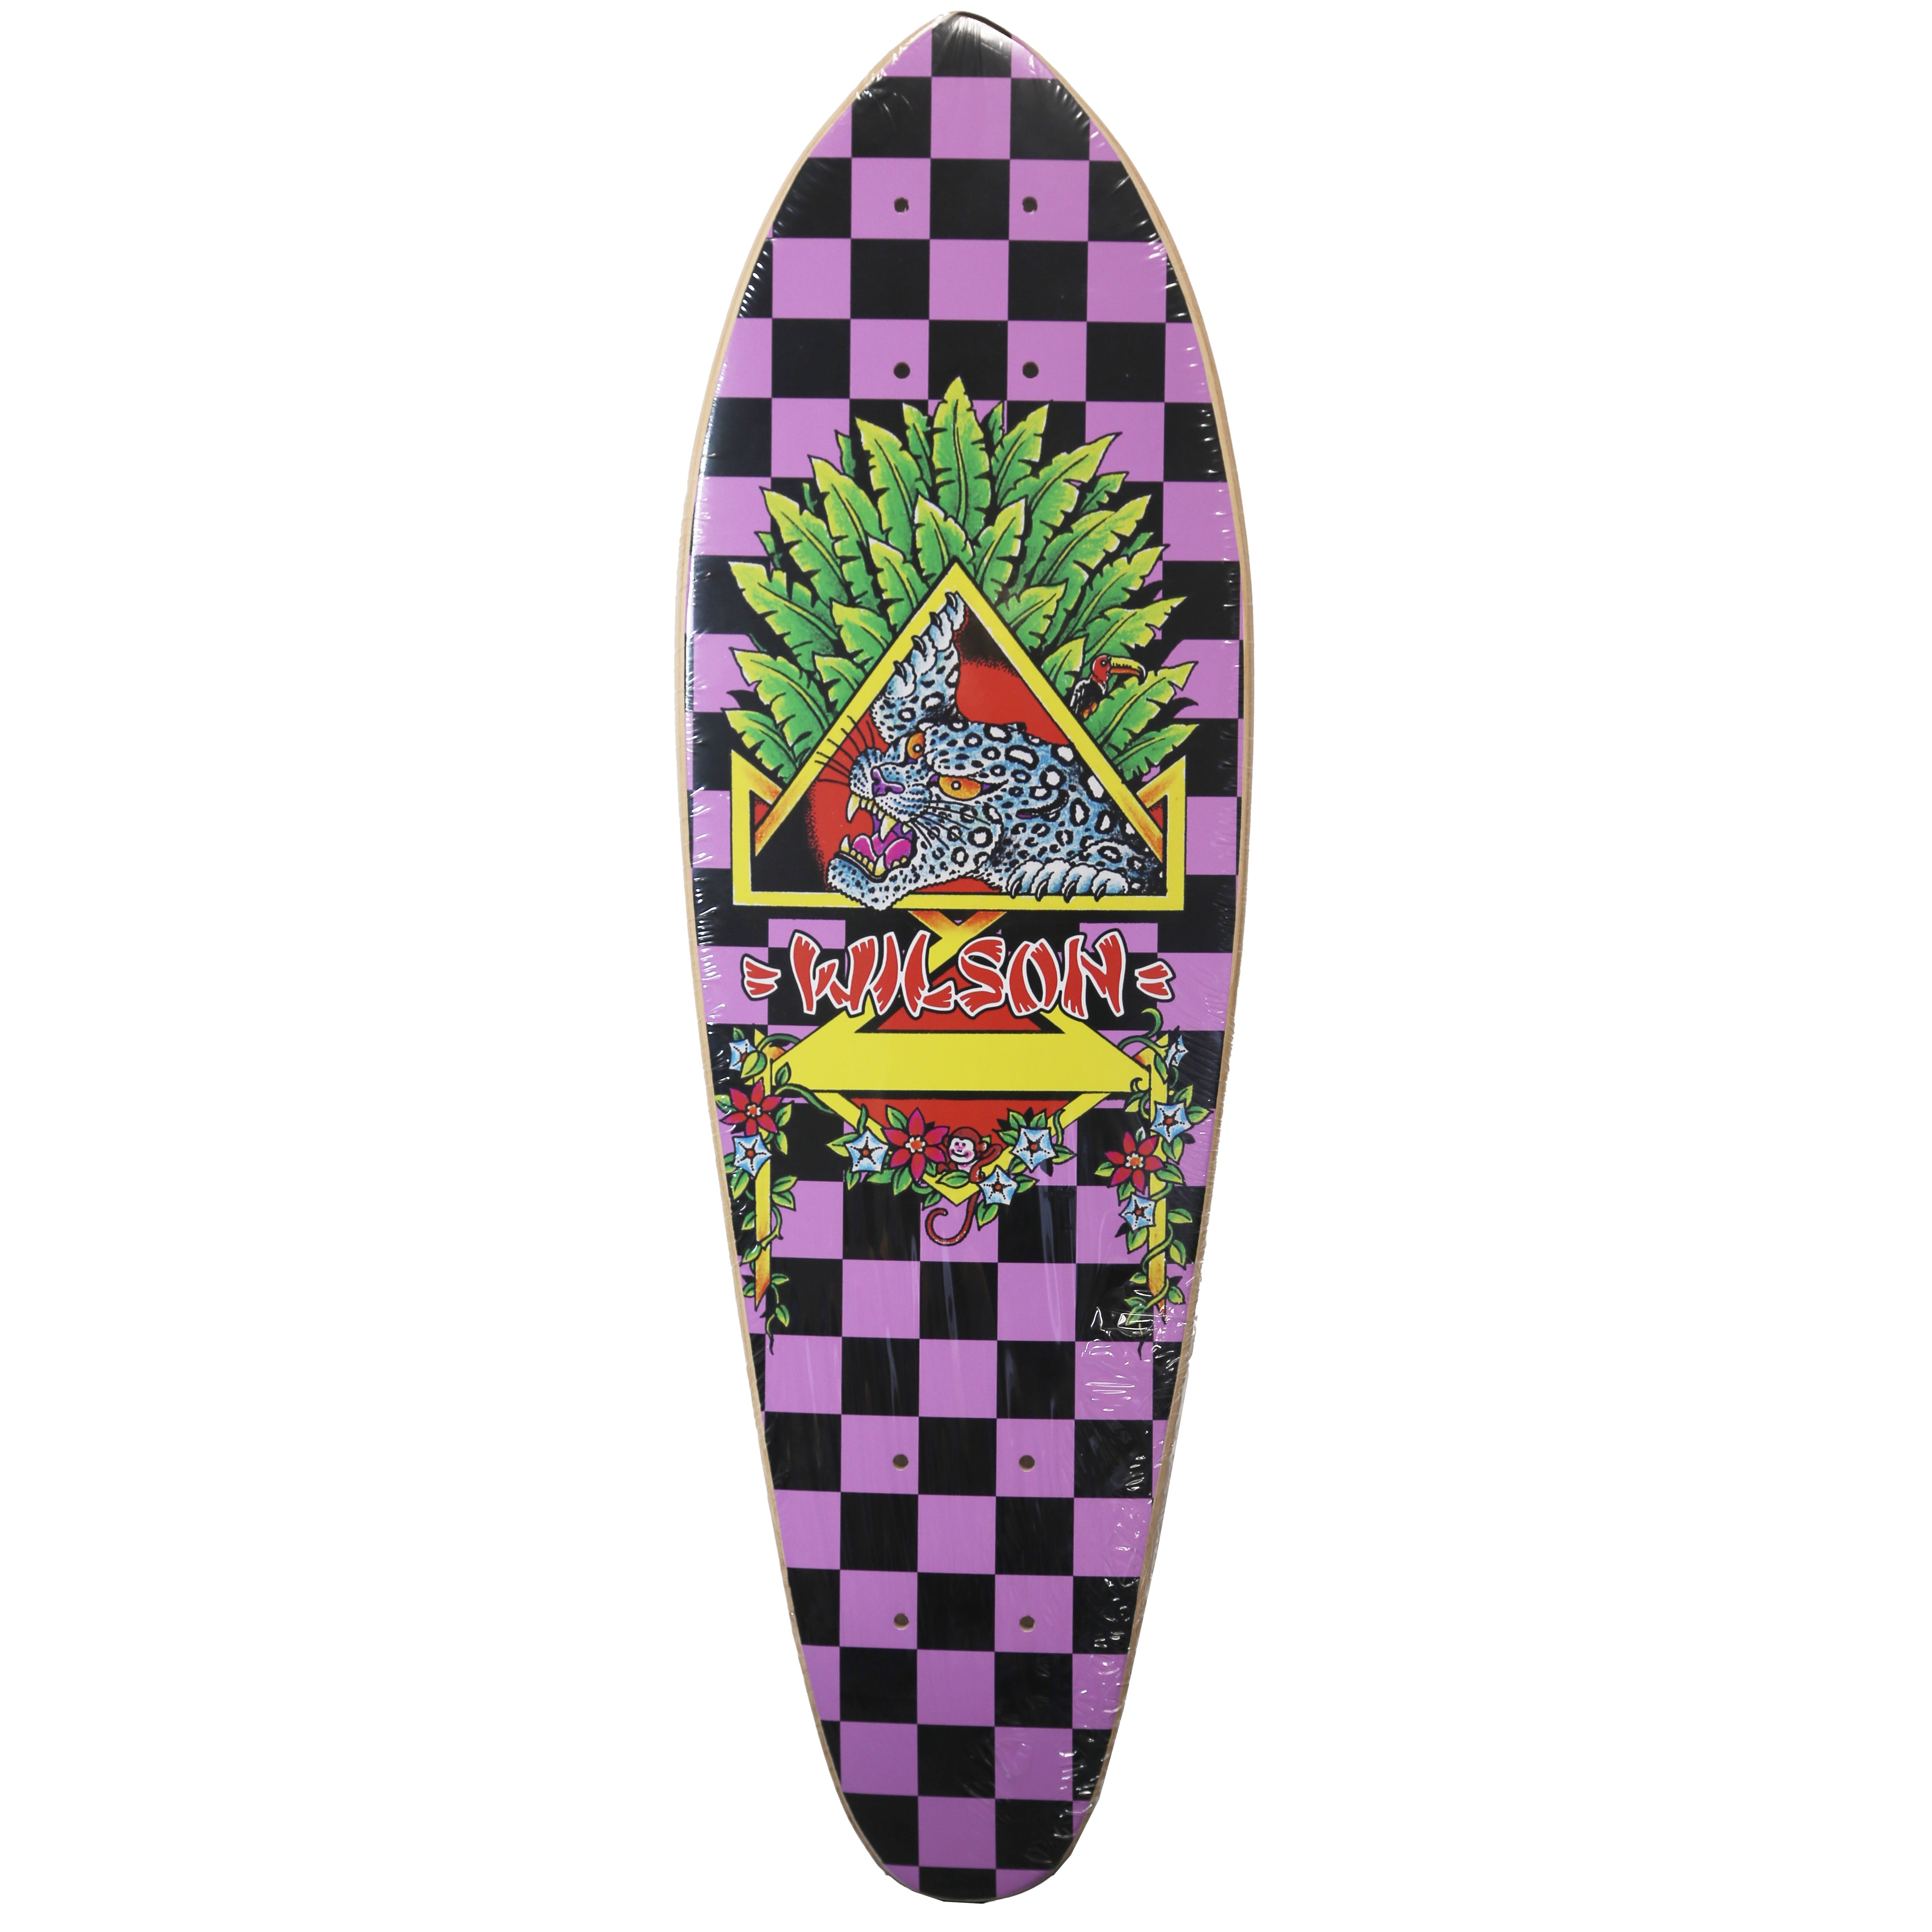 Mike Wilson Limited Edition Skateboard Decks